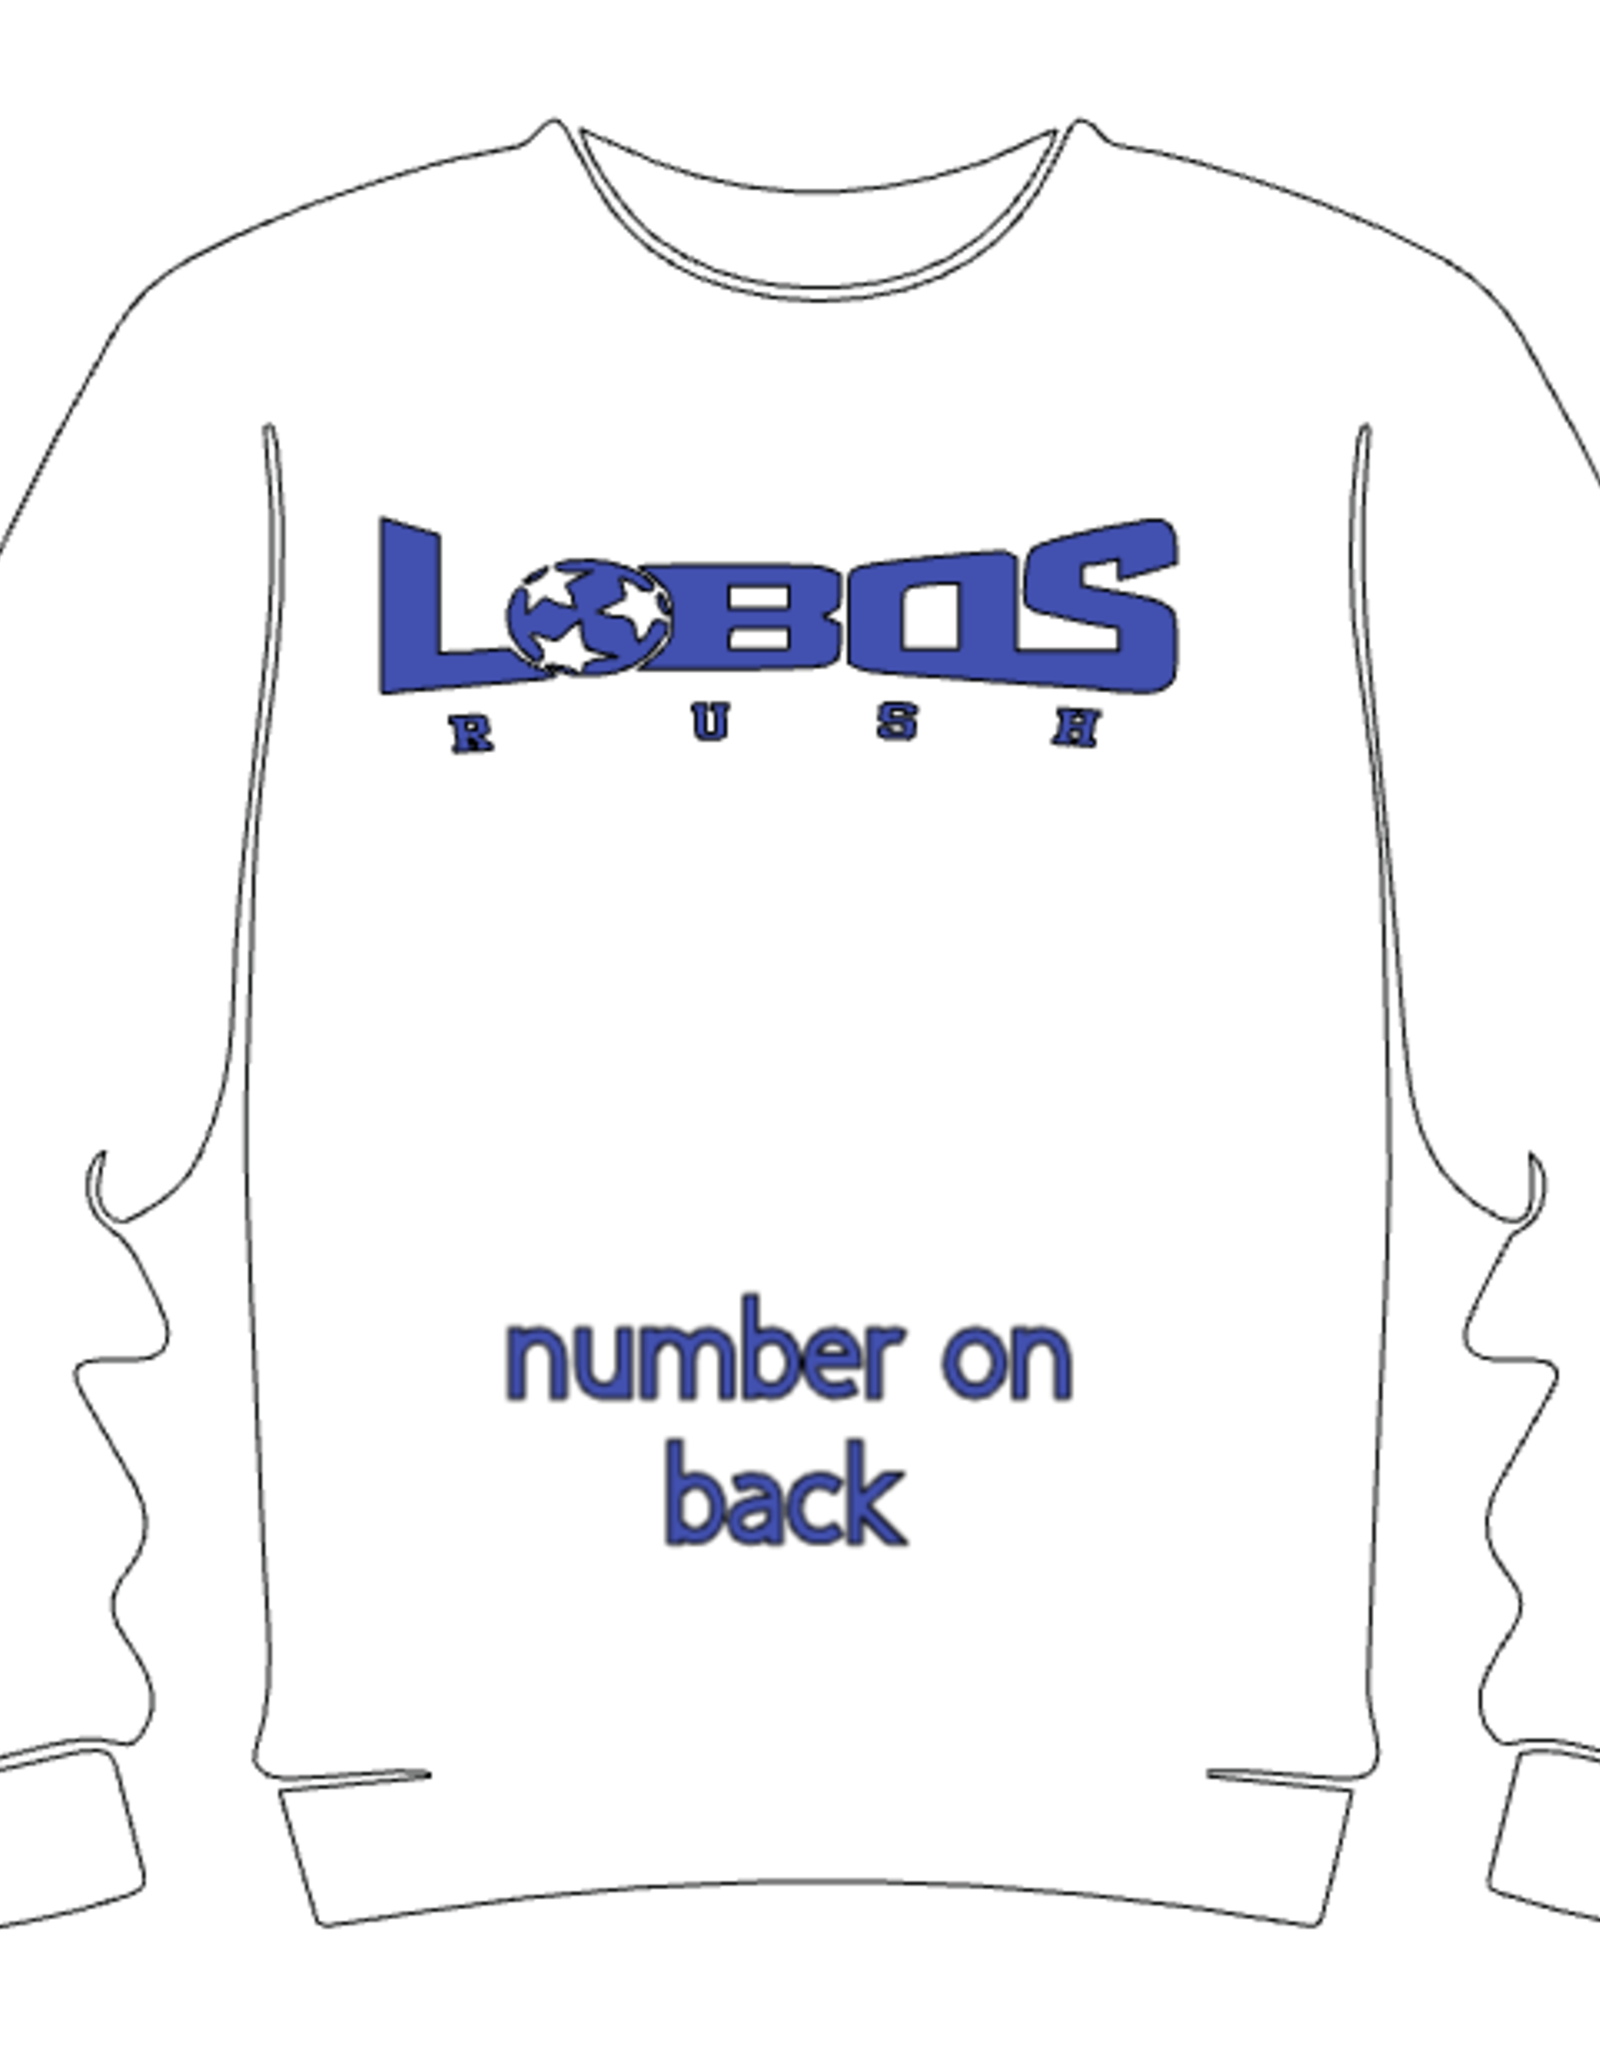 Gildan Lobos Sweatshirt